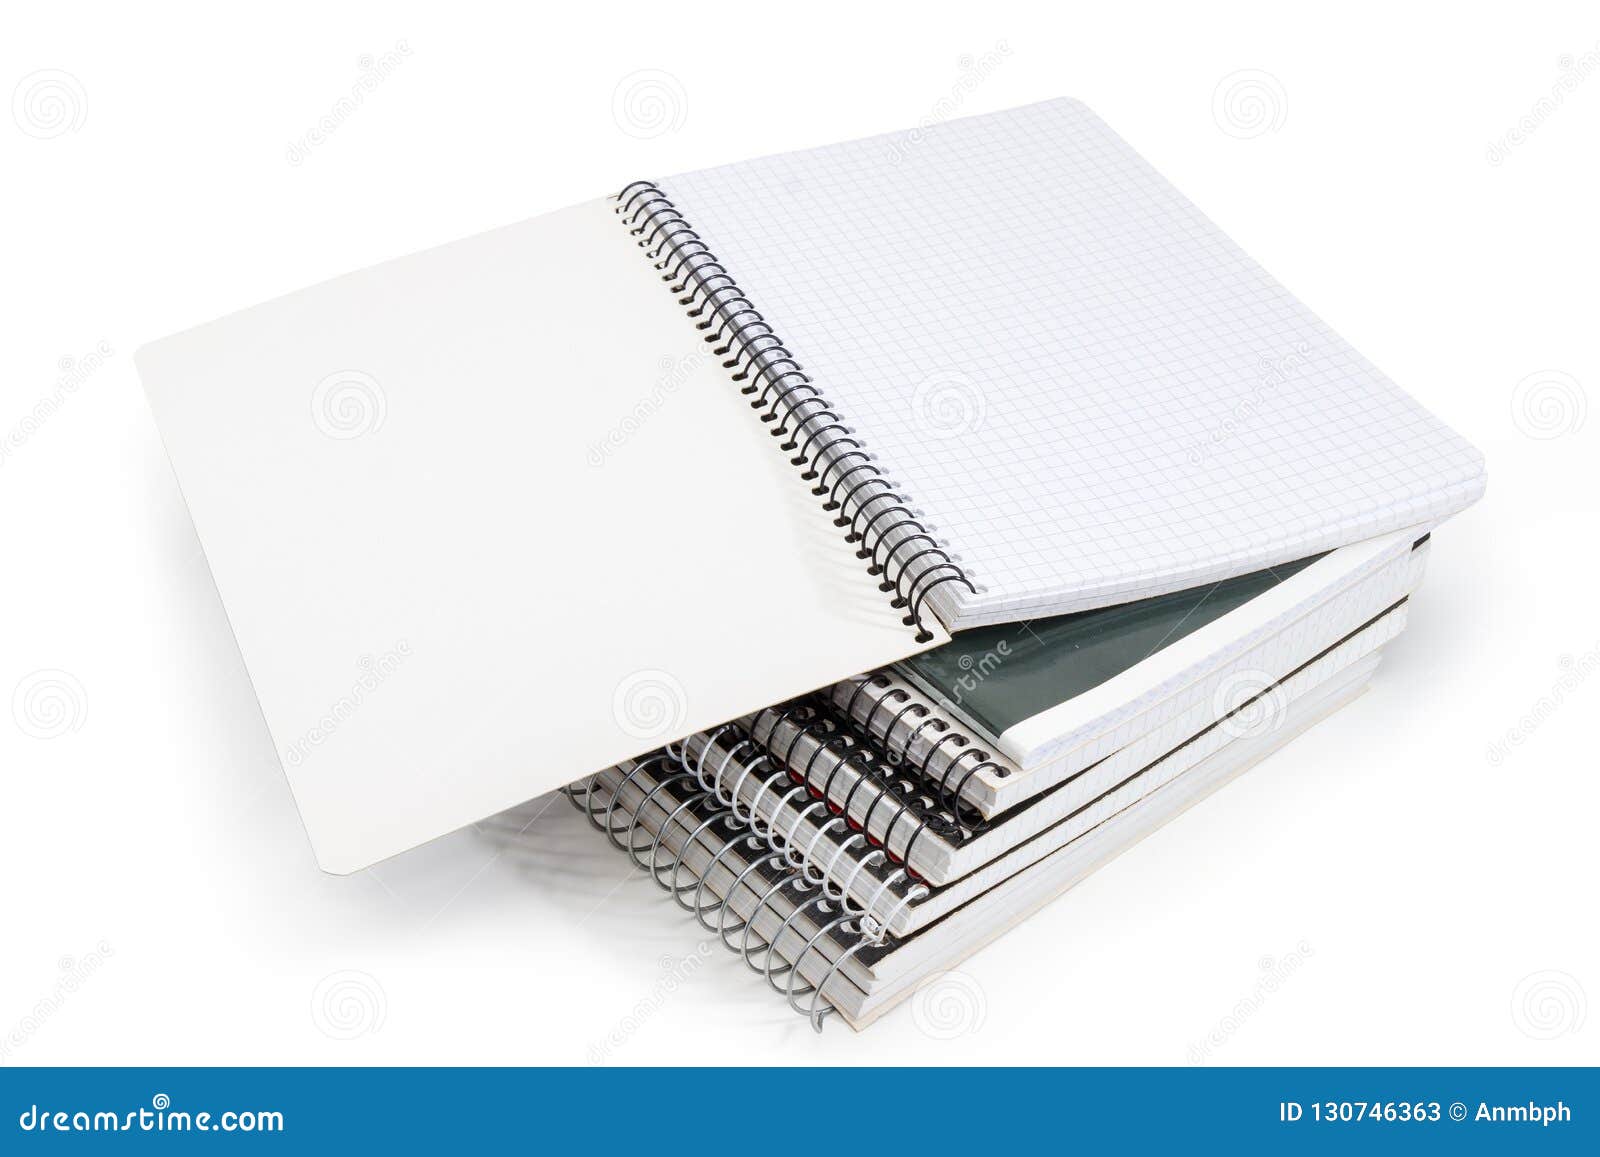 Open blank sketchbook stock image. Image of wire, blank - 13449683